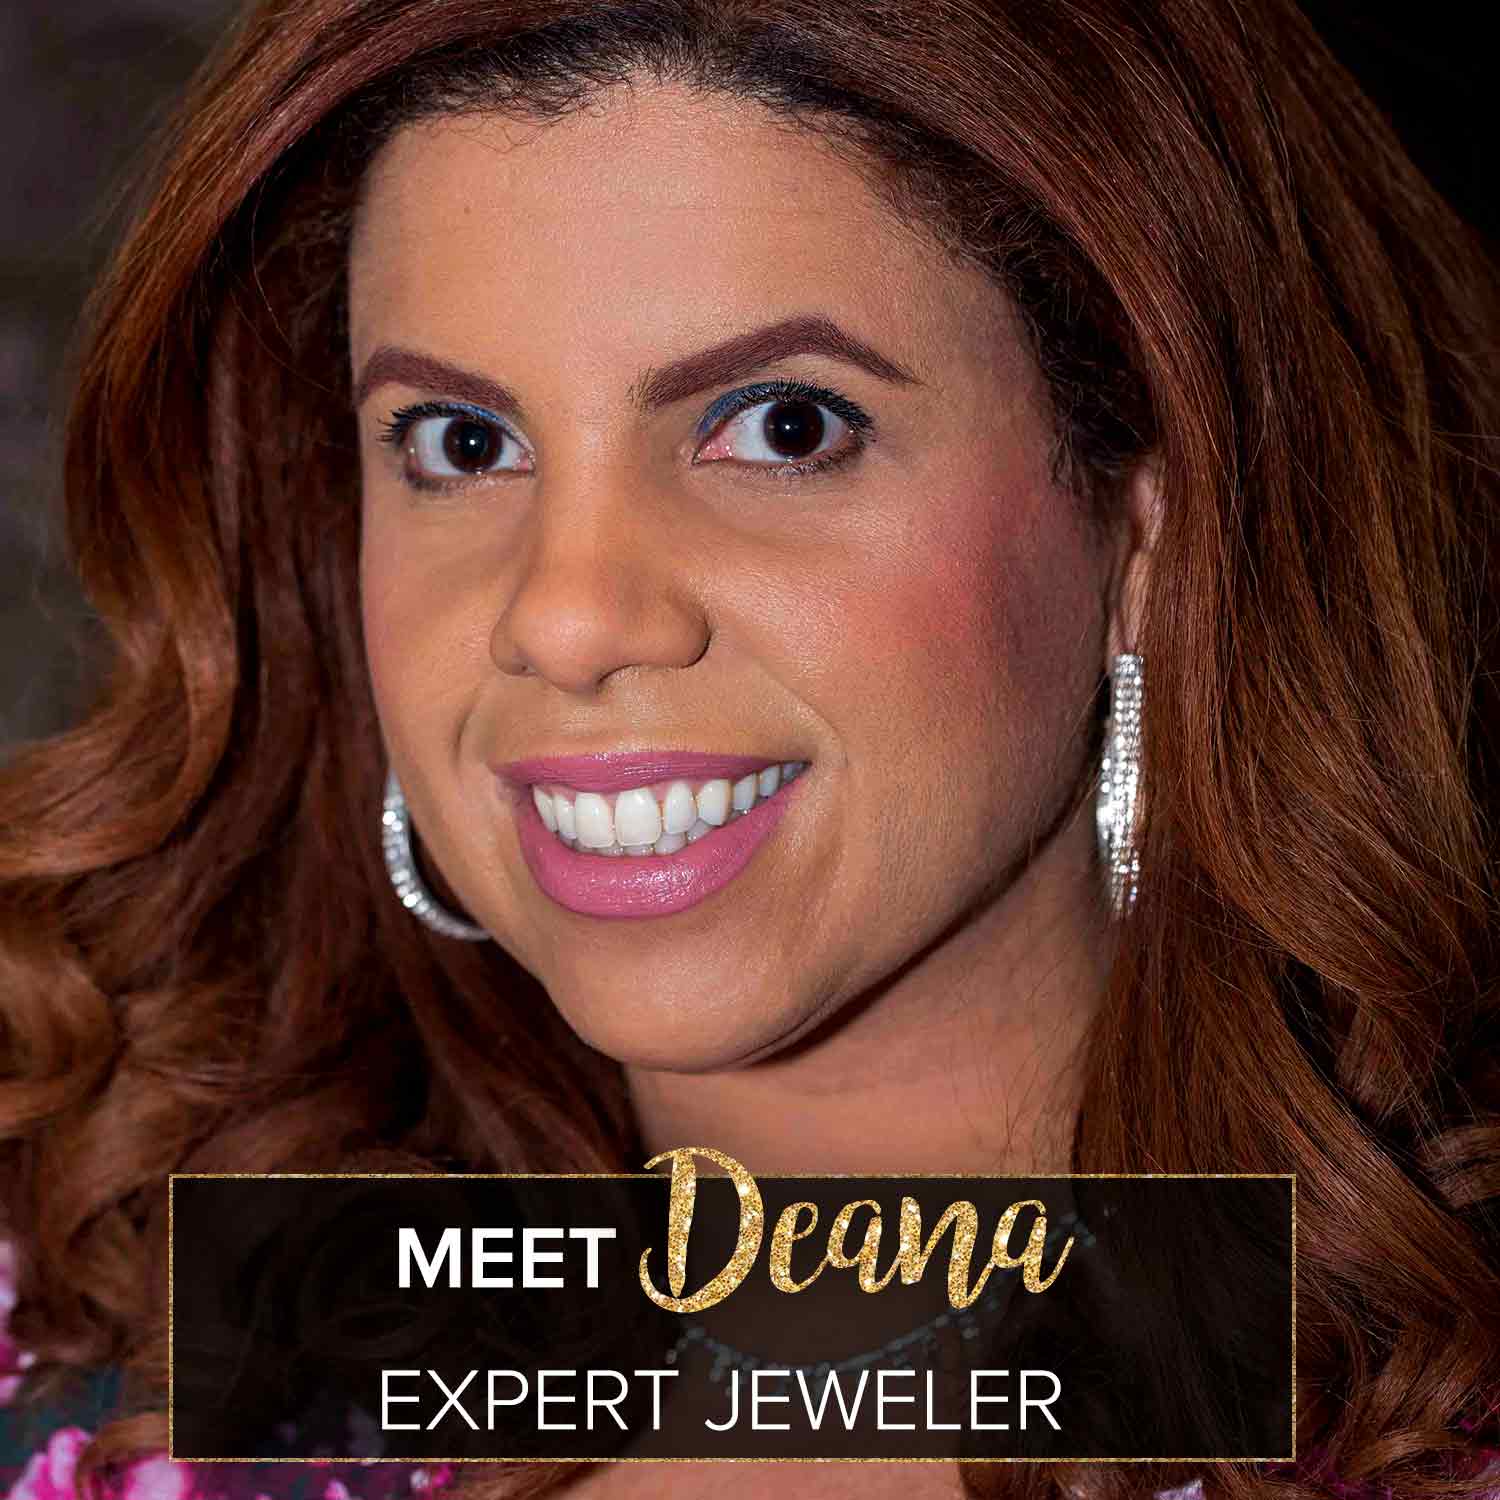 Jeweler Deana from Steven Singer Jewelers